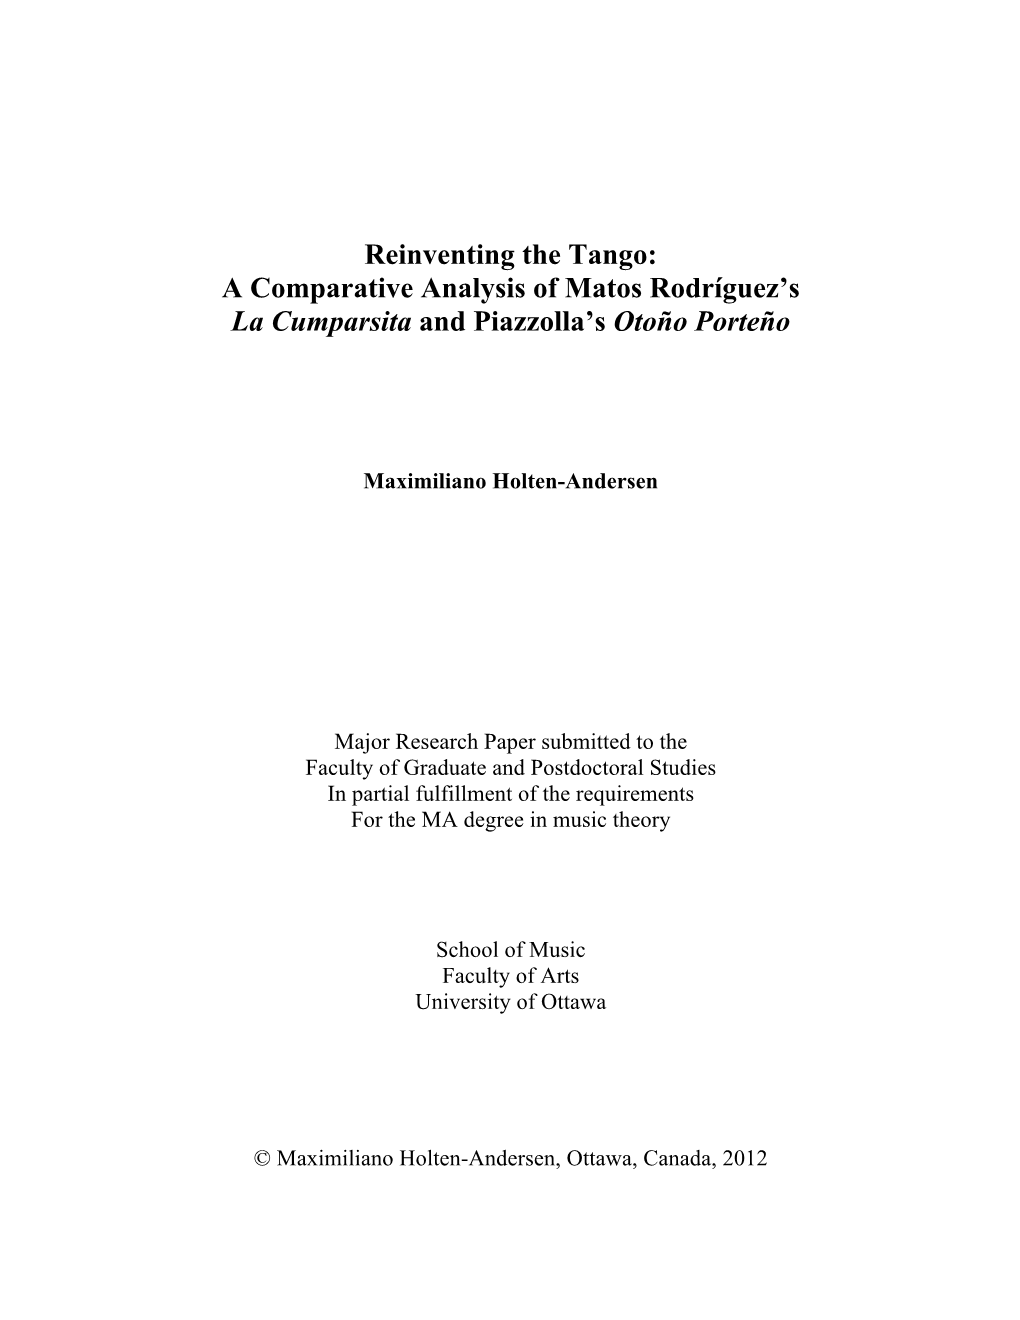 Reinventing the Tango: a Comparative Analysis of Matos Rodríguez's La Cumparsita and Piazzolla's Otoño Porteño